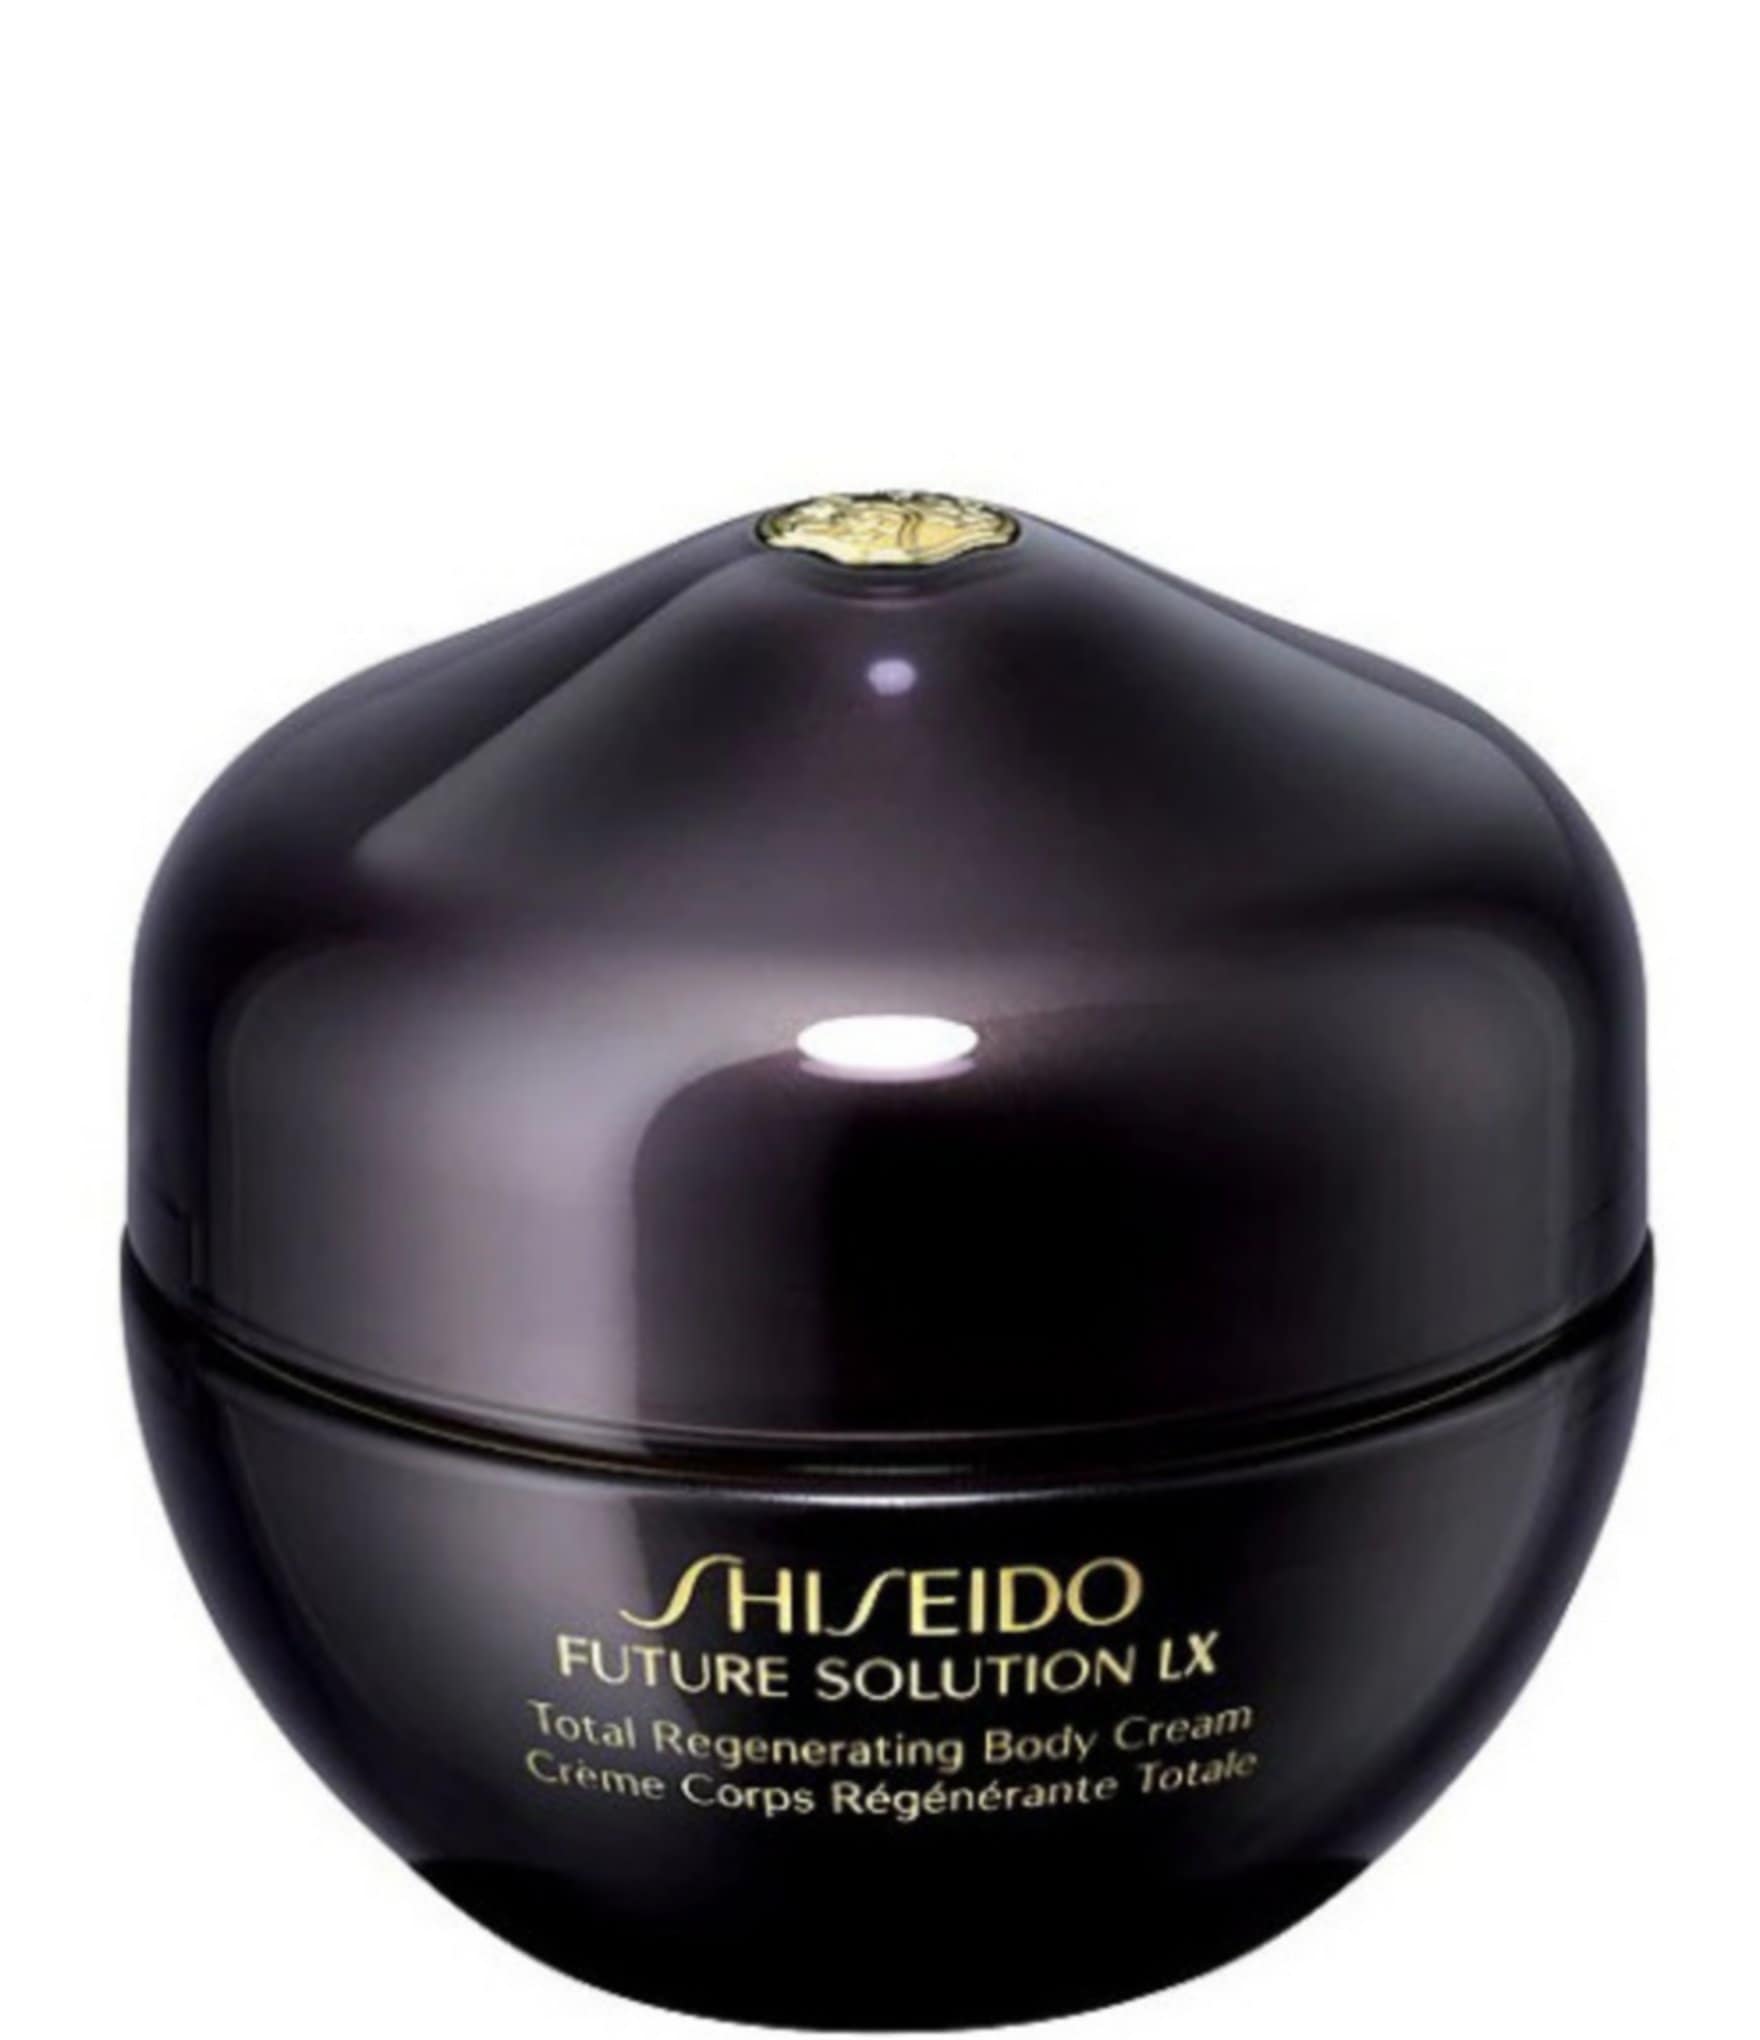 Shiseido lx. Крем шисейдо Future solution. Shiseido Future solution LX. Крем для тела Future solution LX. Shiseido Future solution LX оттенки.